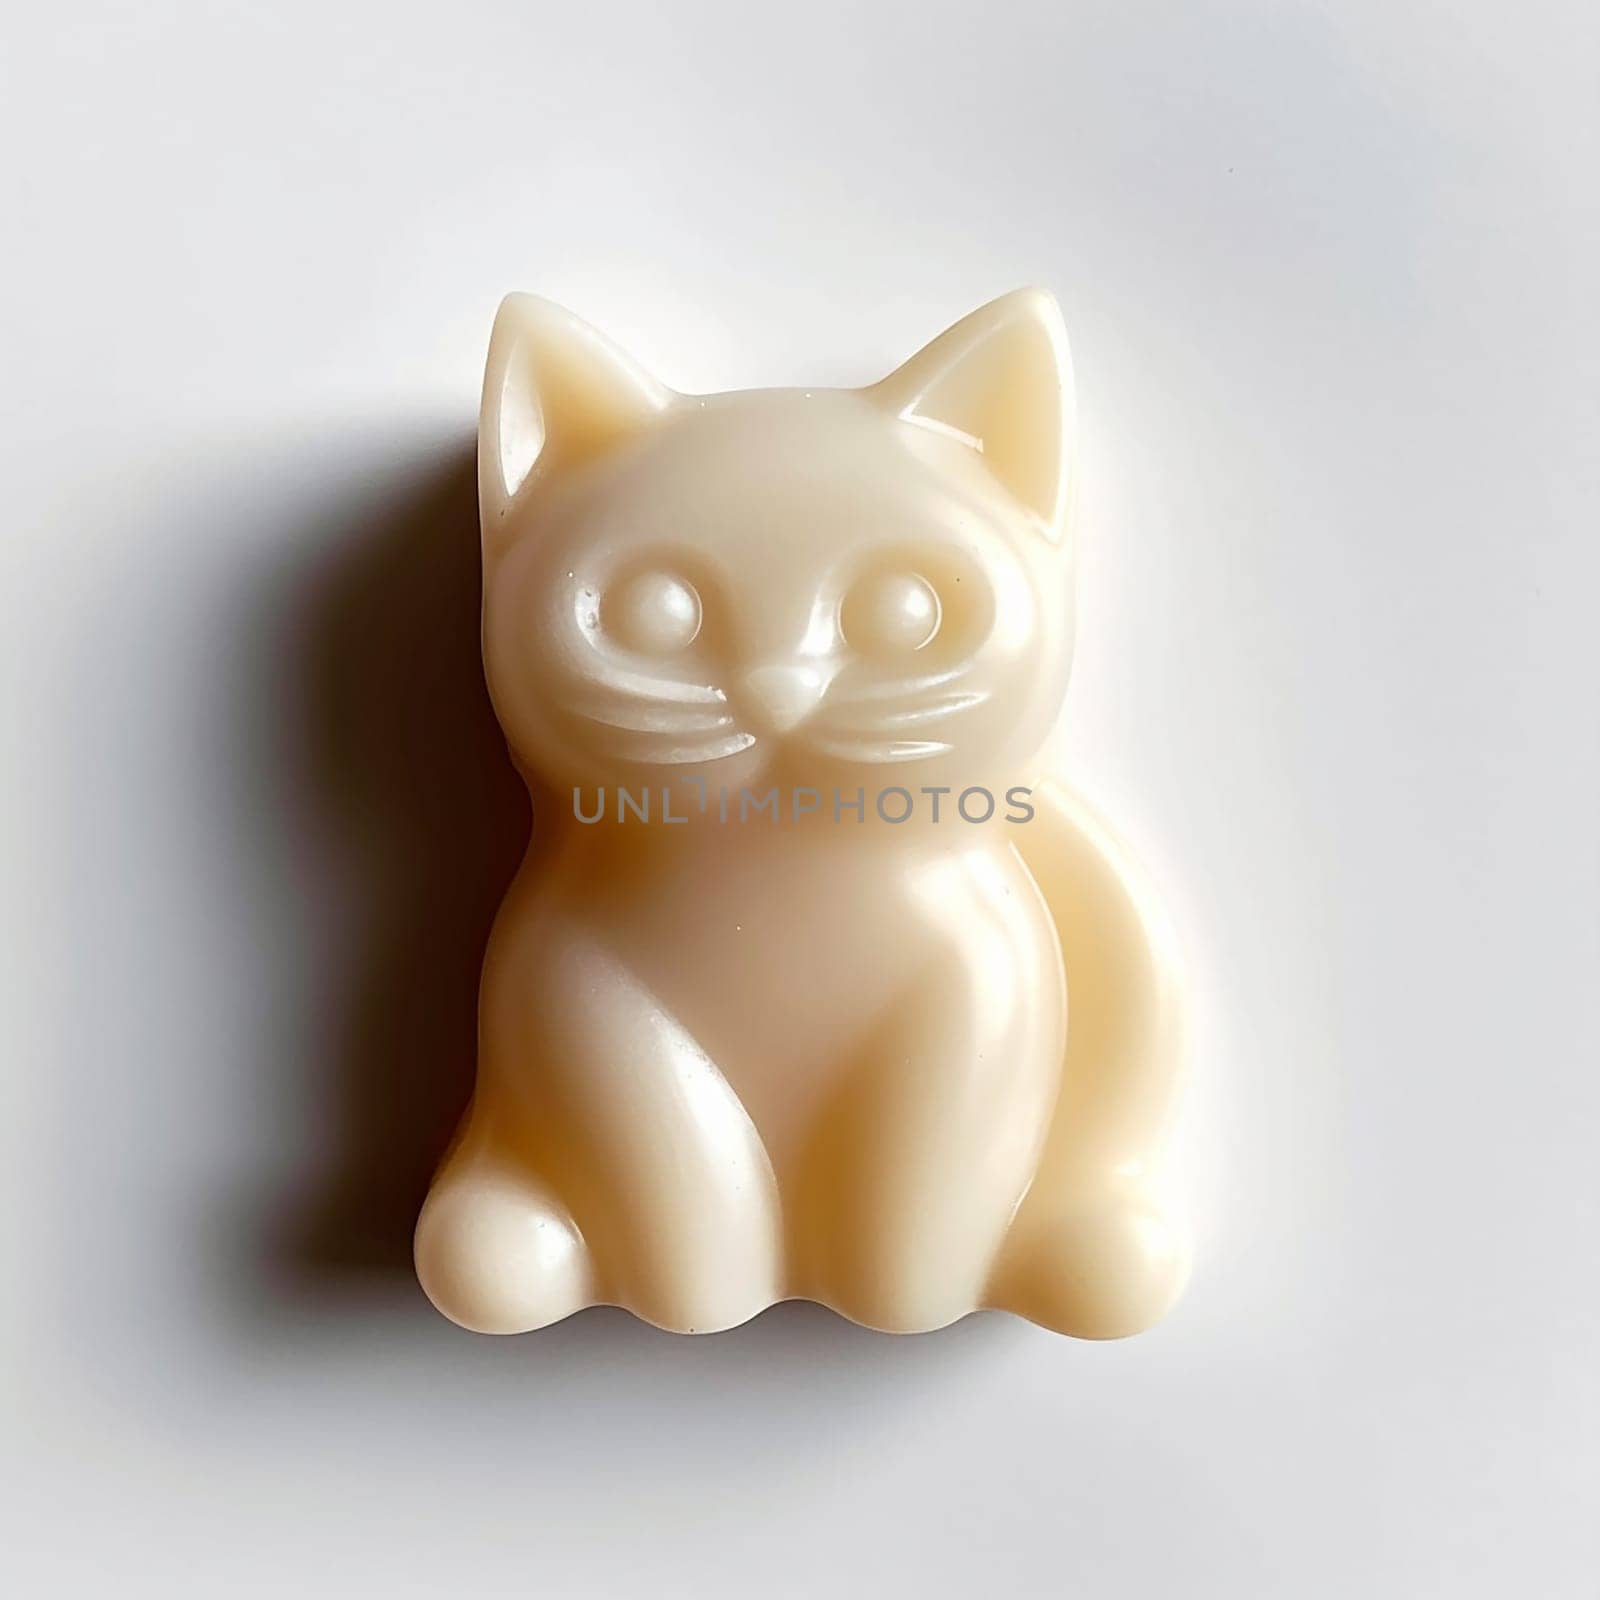 White cat-shaped figurine on a plain background.